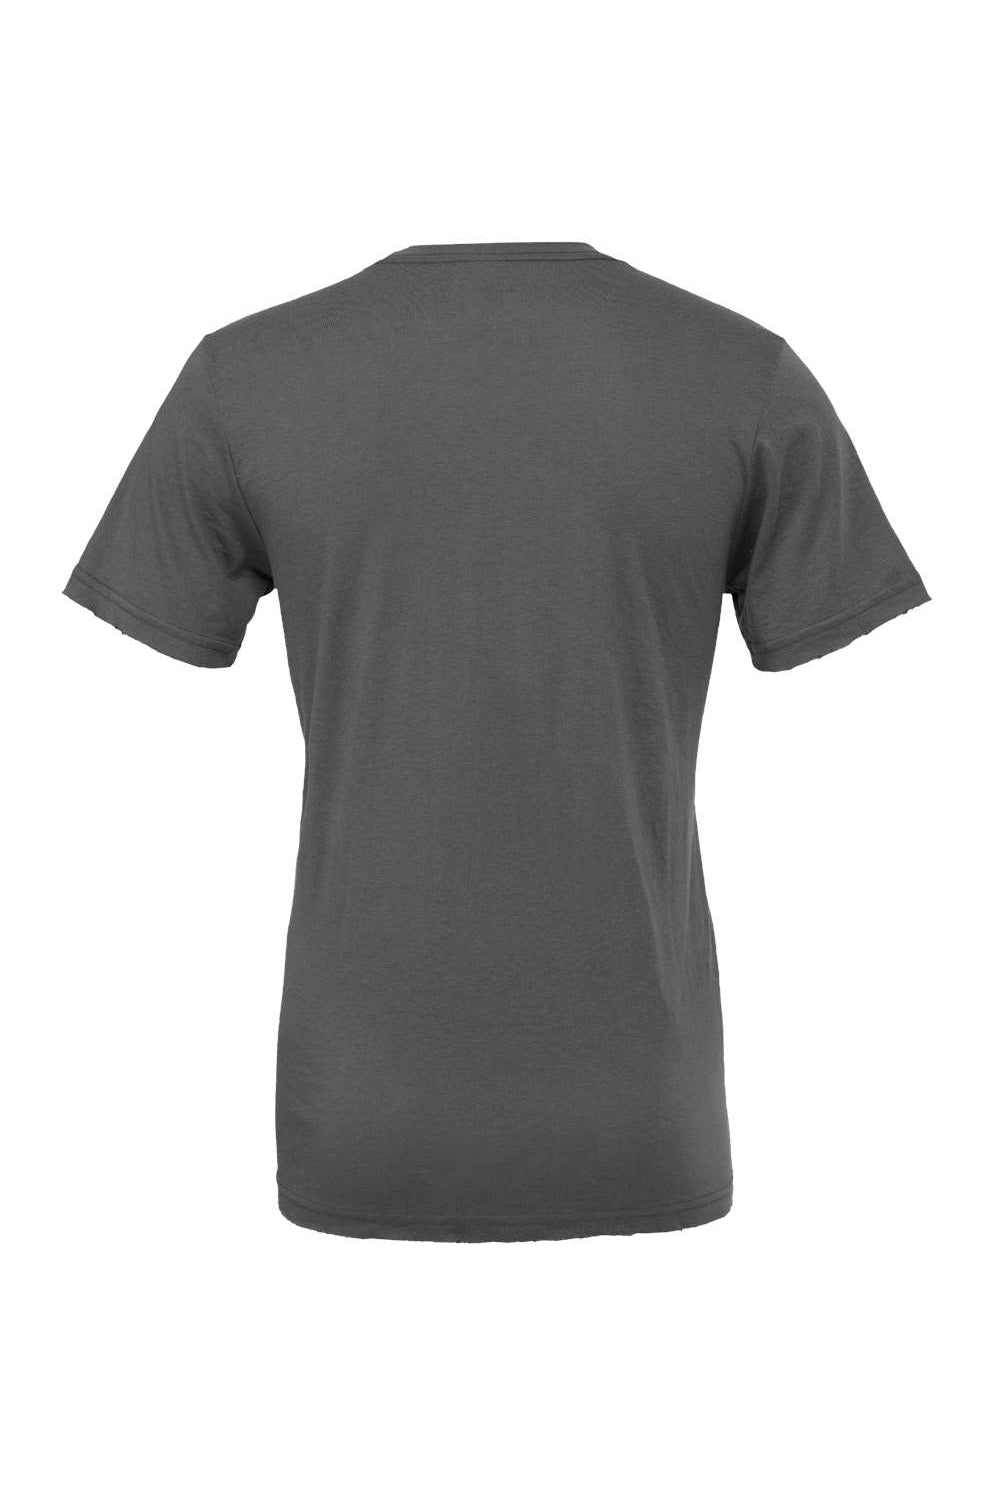 Bella + Canvas BC3001/3001C Mens Jersey Short Sleeve Crewneck T-Shirt Asphalt Grey Flat Back